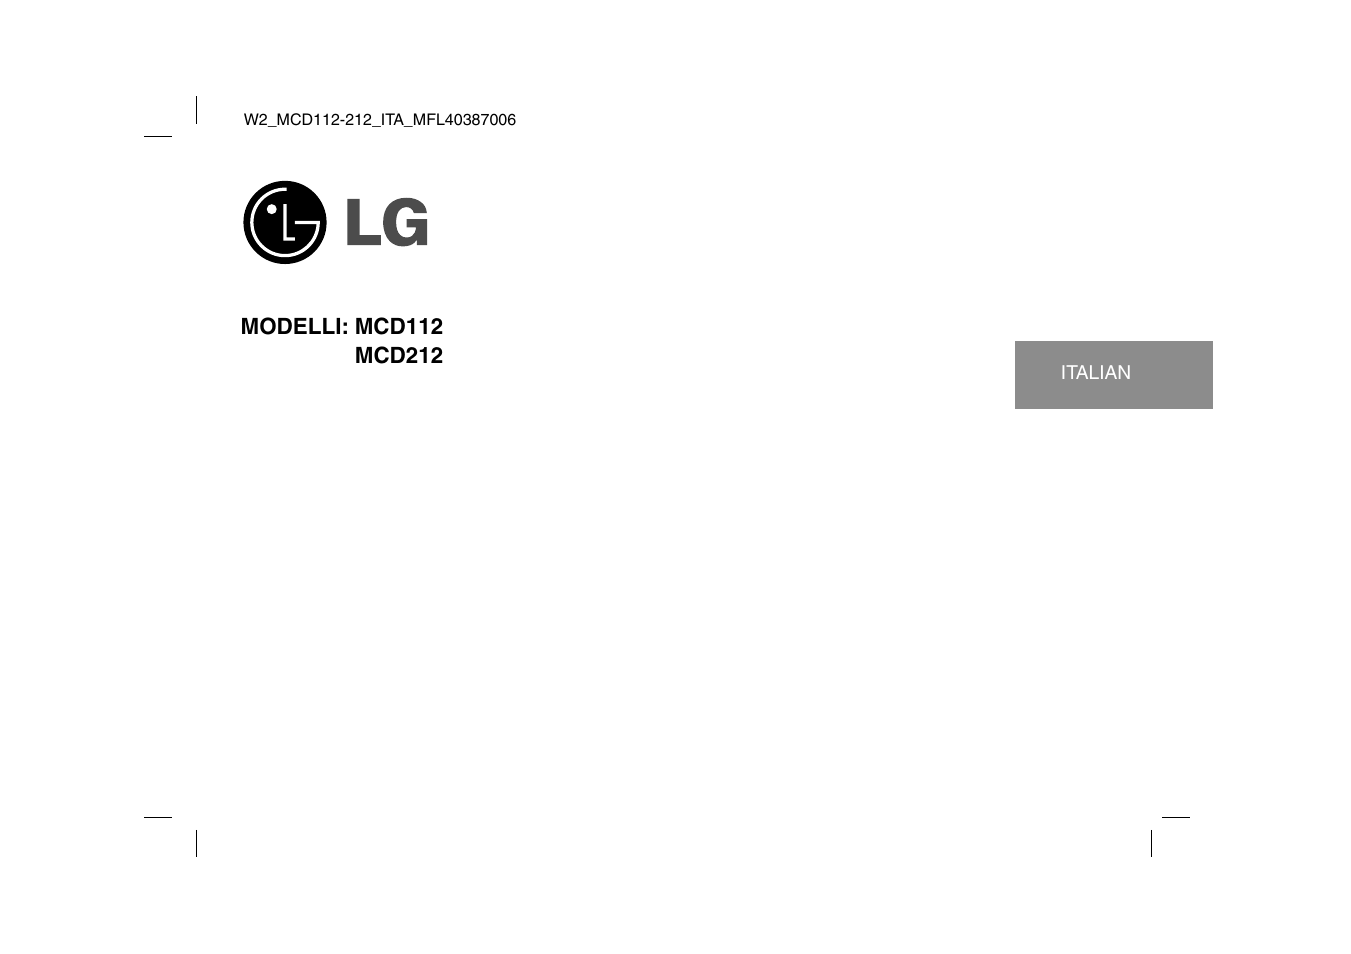 LG MCD212 Manuale d'uso | Pagine: 12